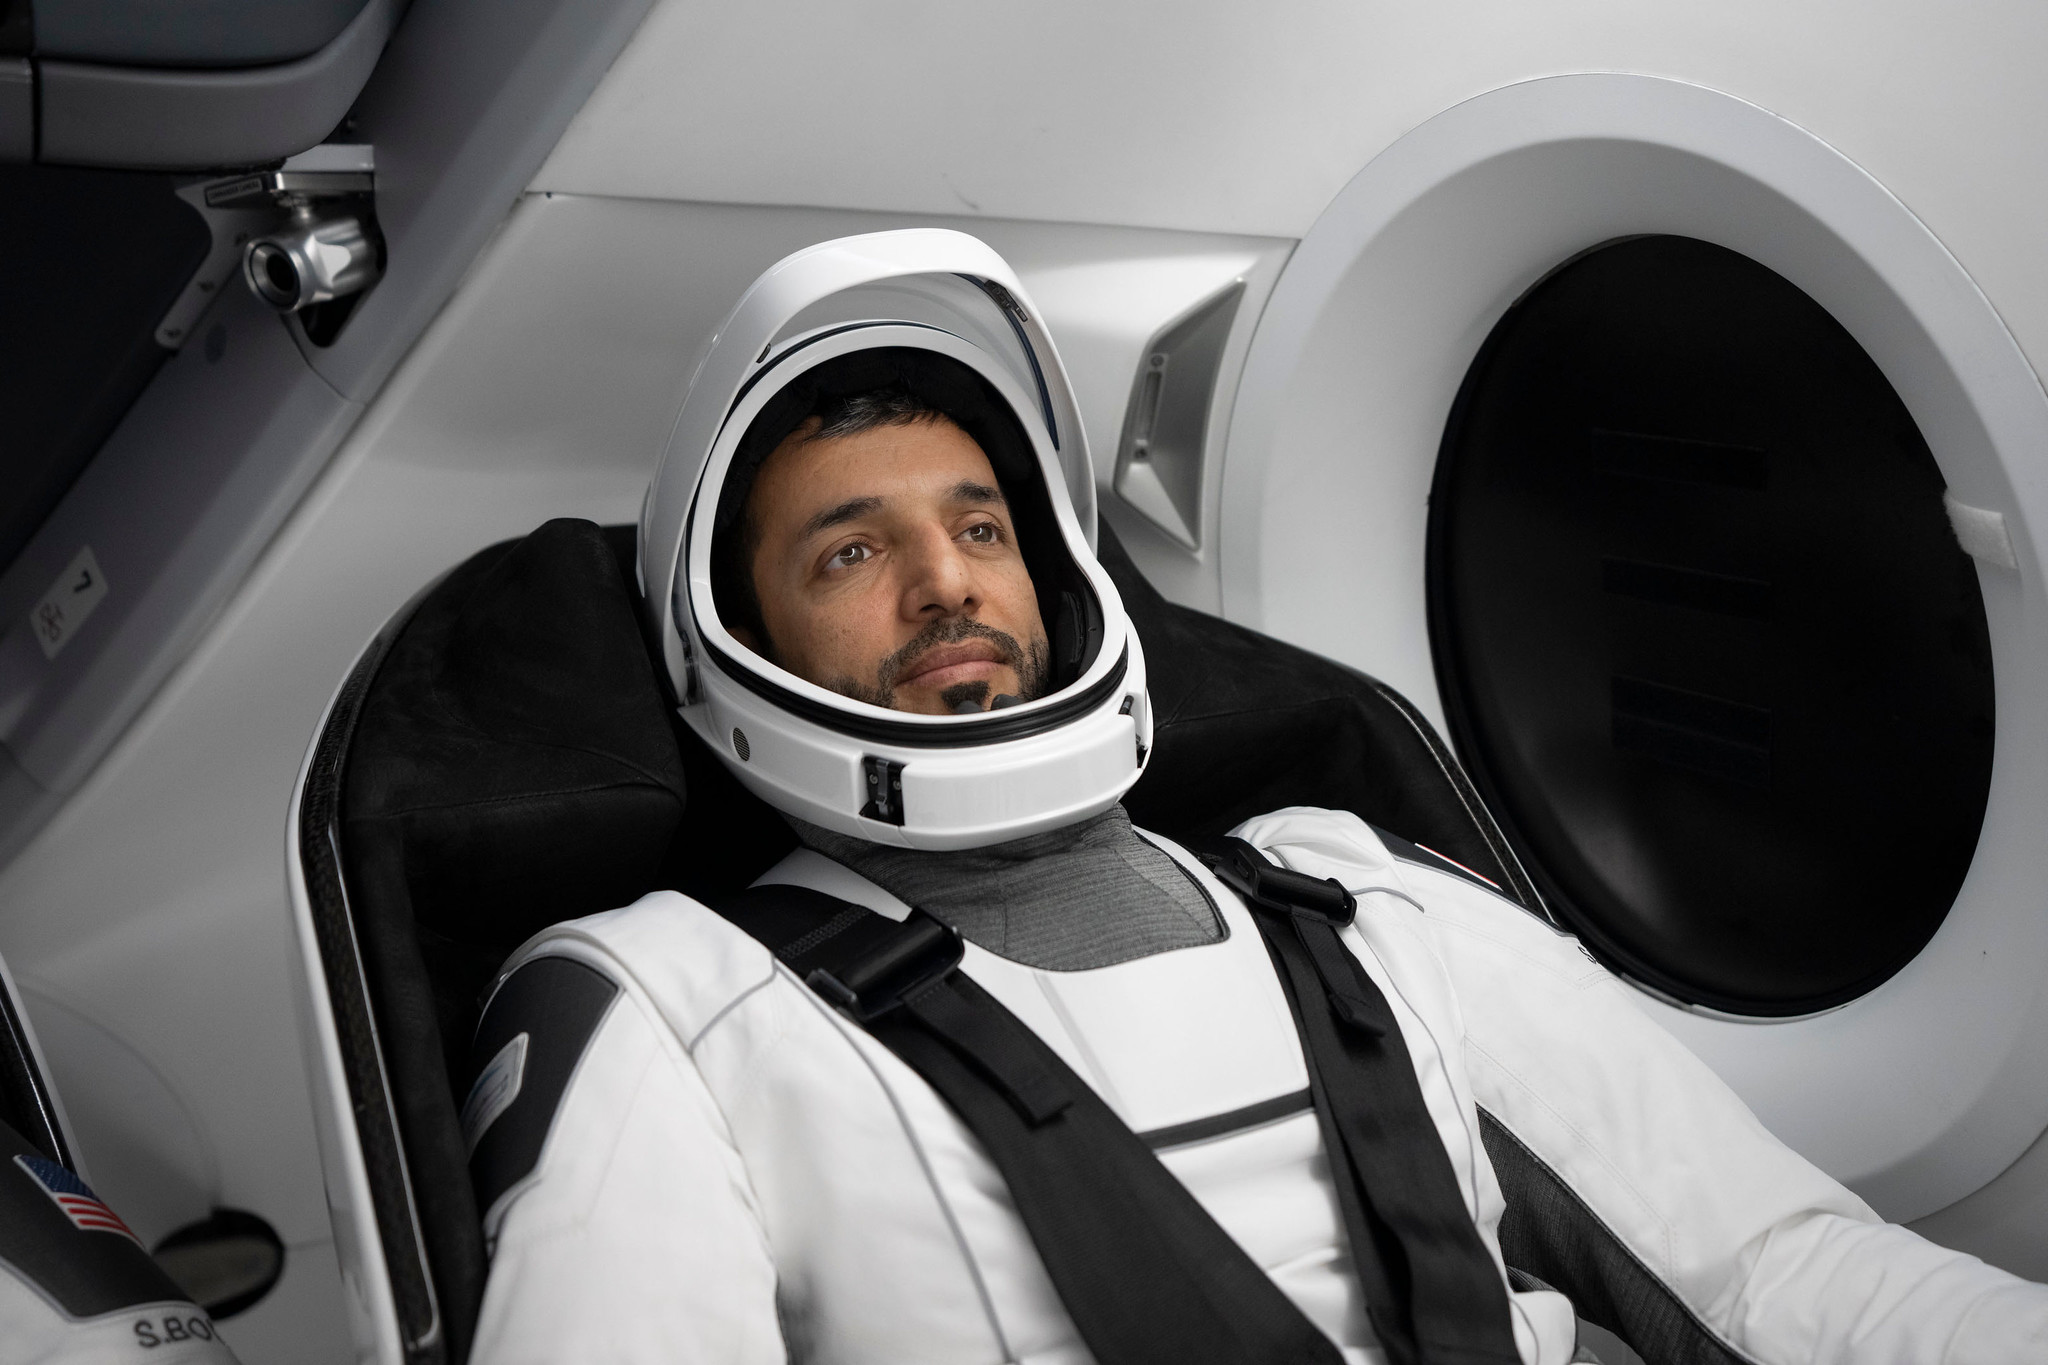 United Arab Emirates astronaut Sultan Al-Neyadi sitting in a spacecraft with seatbelt on, beside a round window